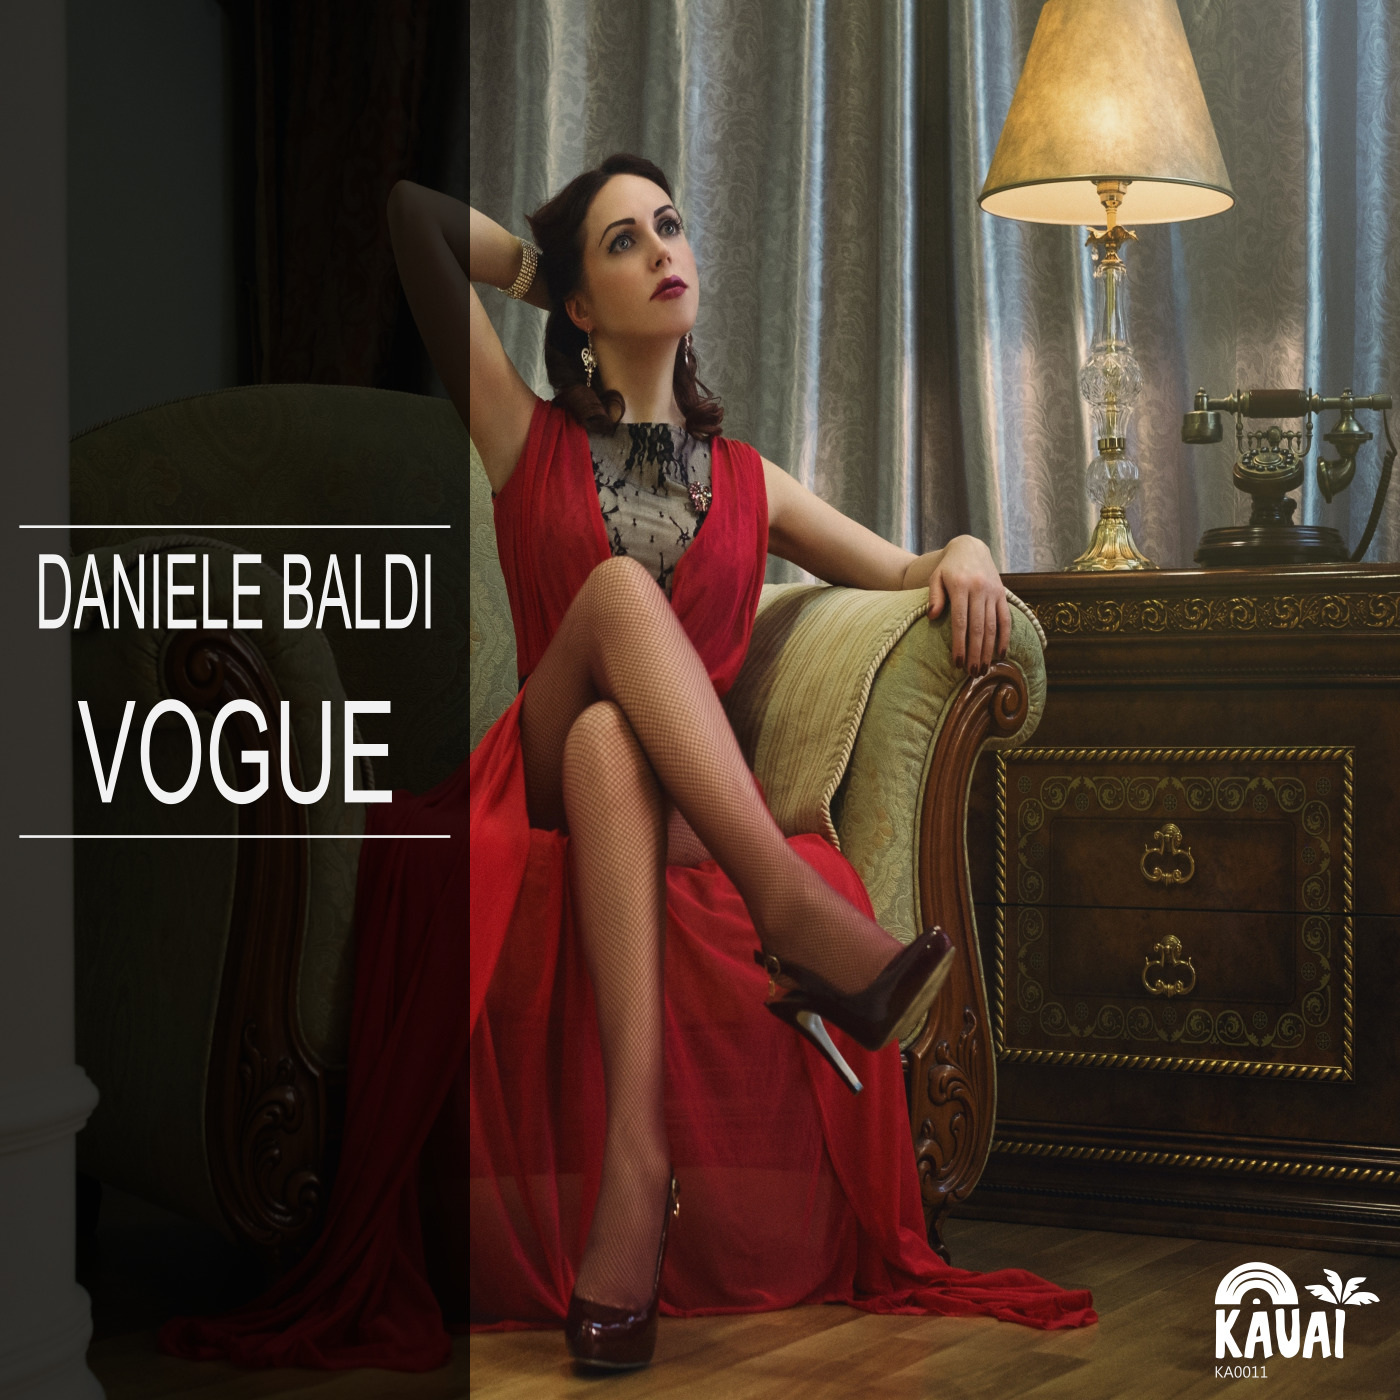 Daniele Baldi - Vogue / Kauai Records